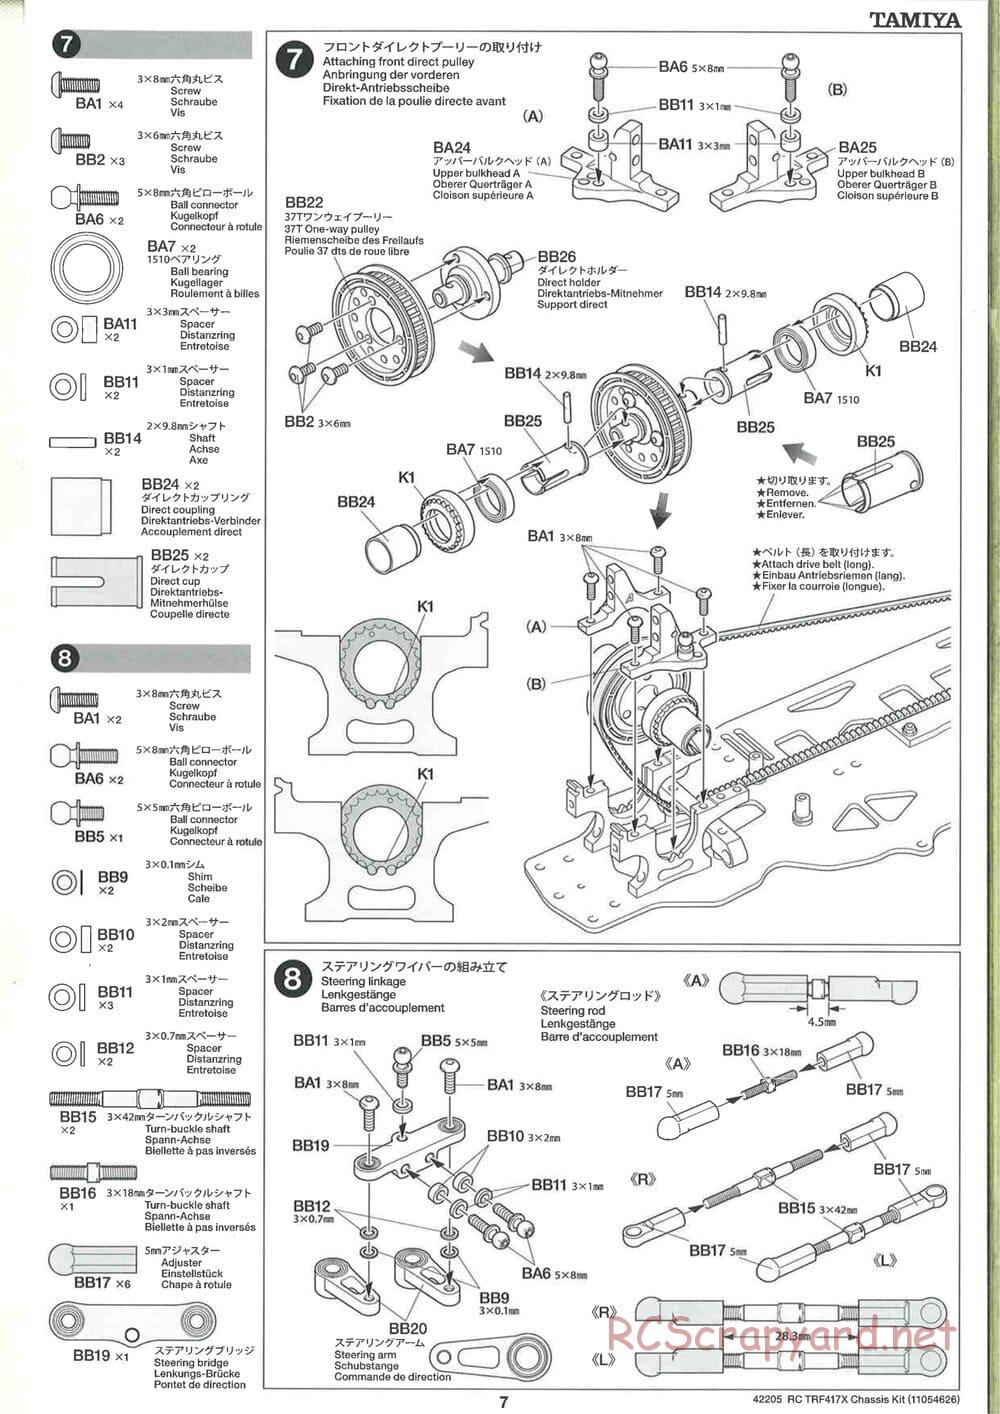 Tamiya - TRF417X Chassis - Manual - Page 7